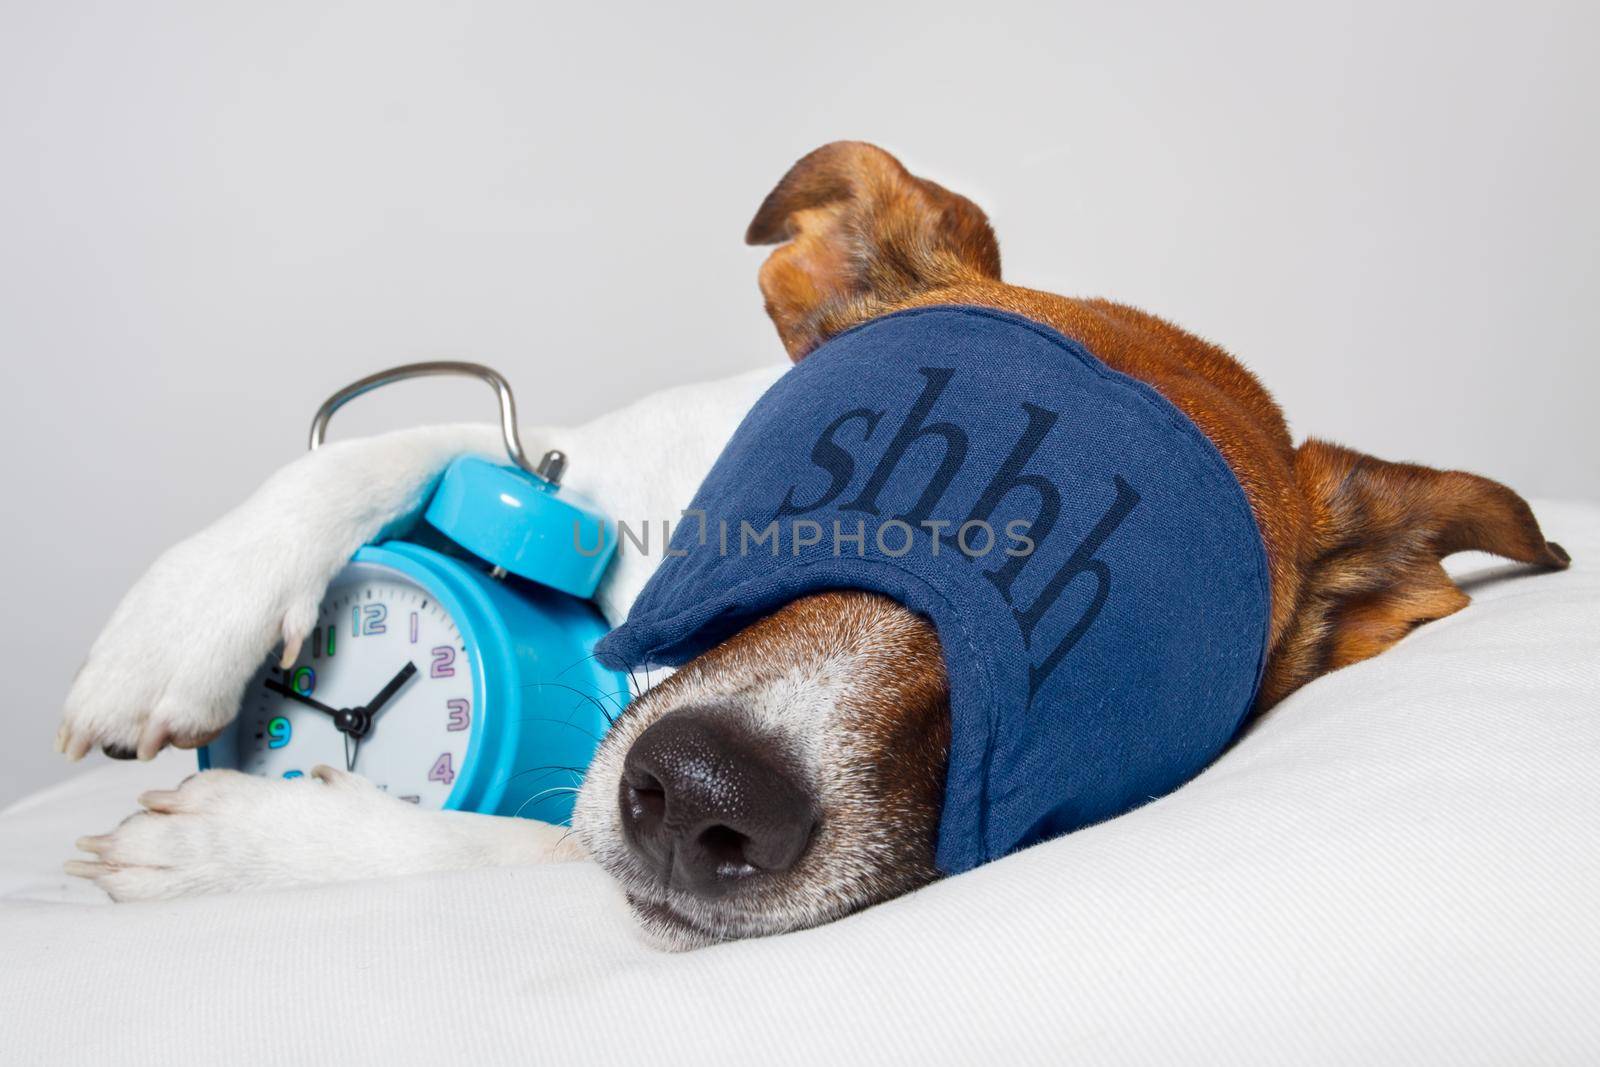 Dog sleeping with alarm clock and sleeping mask by Brosch